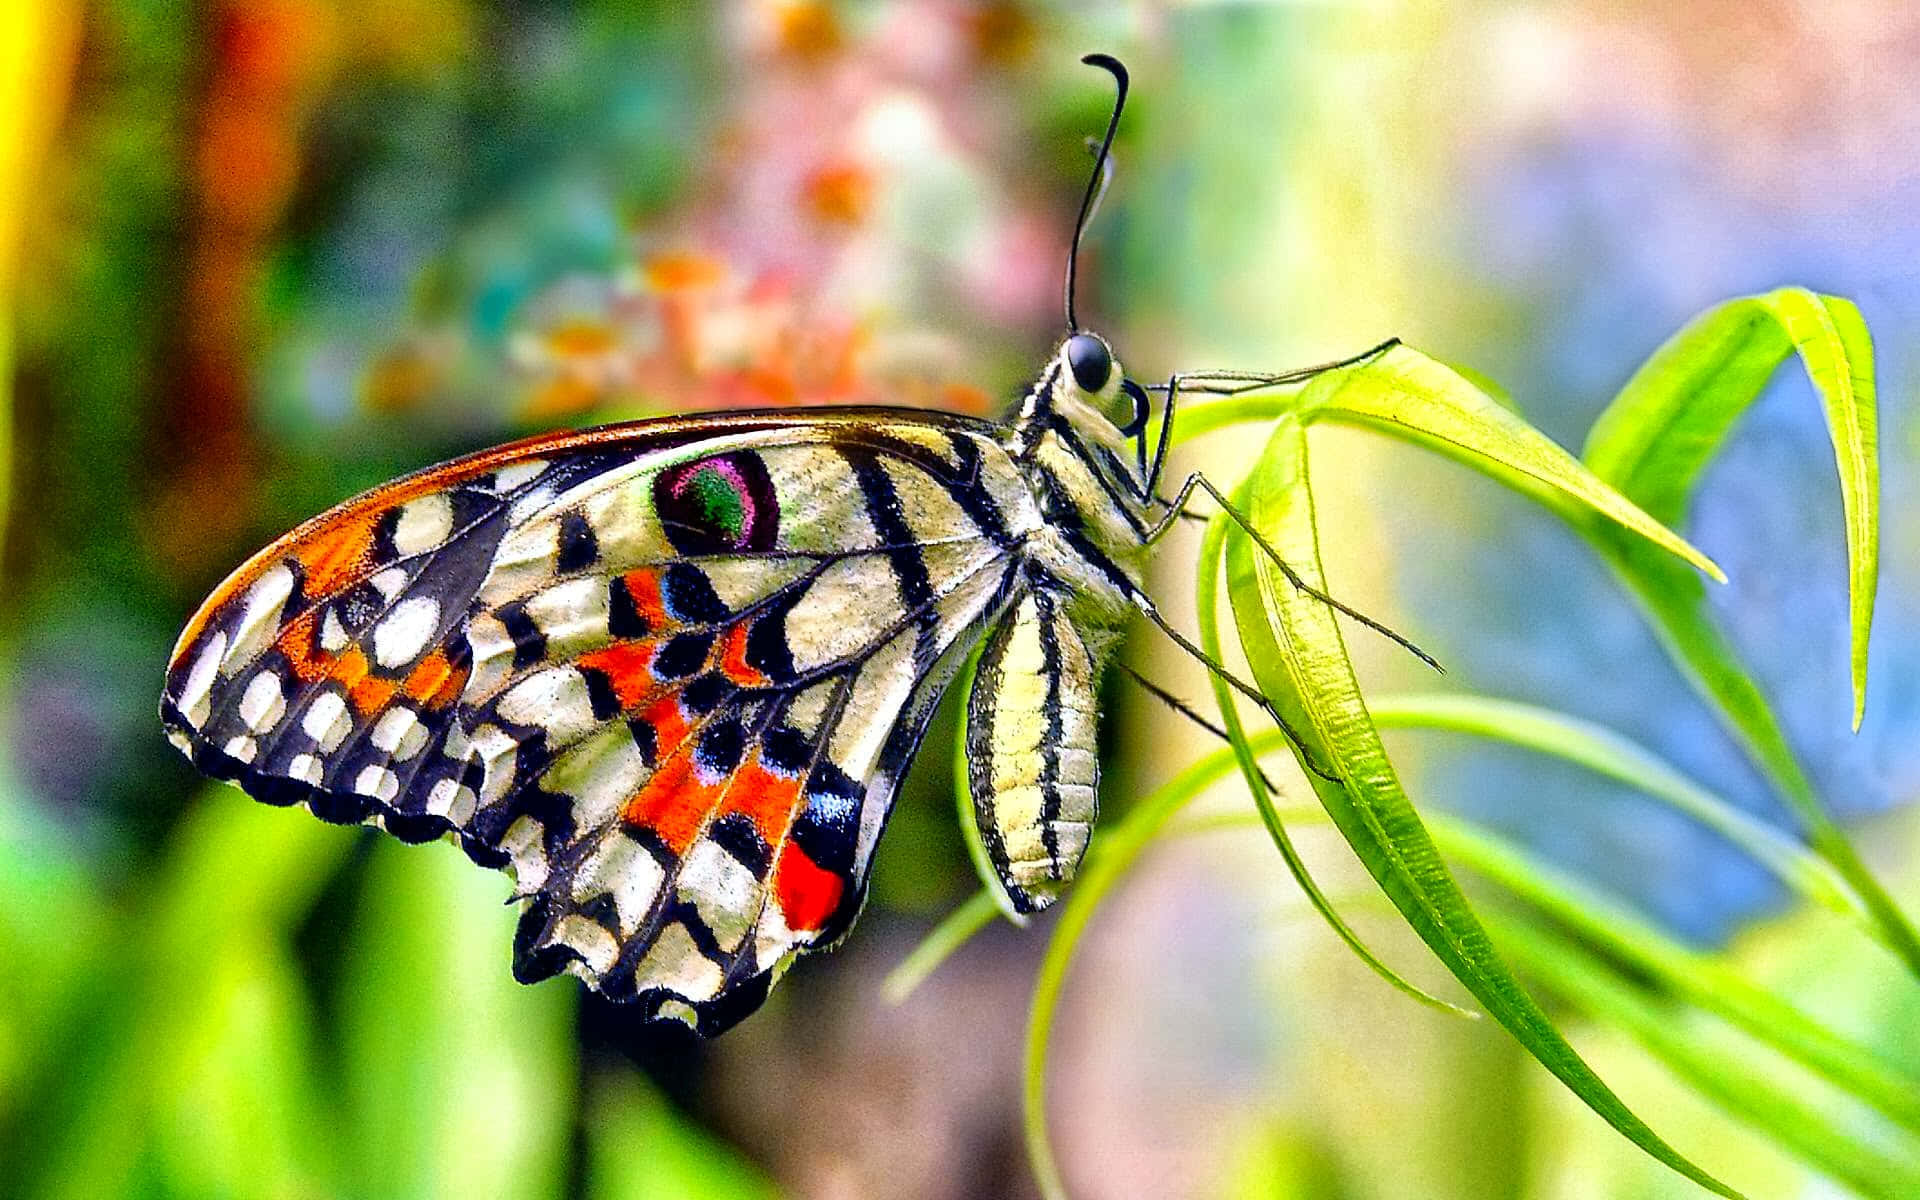 A beautiful butterfly profile